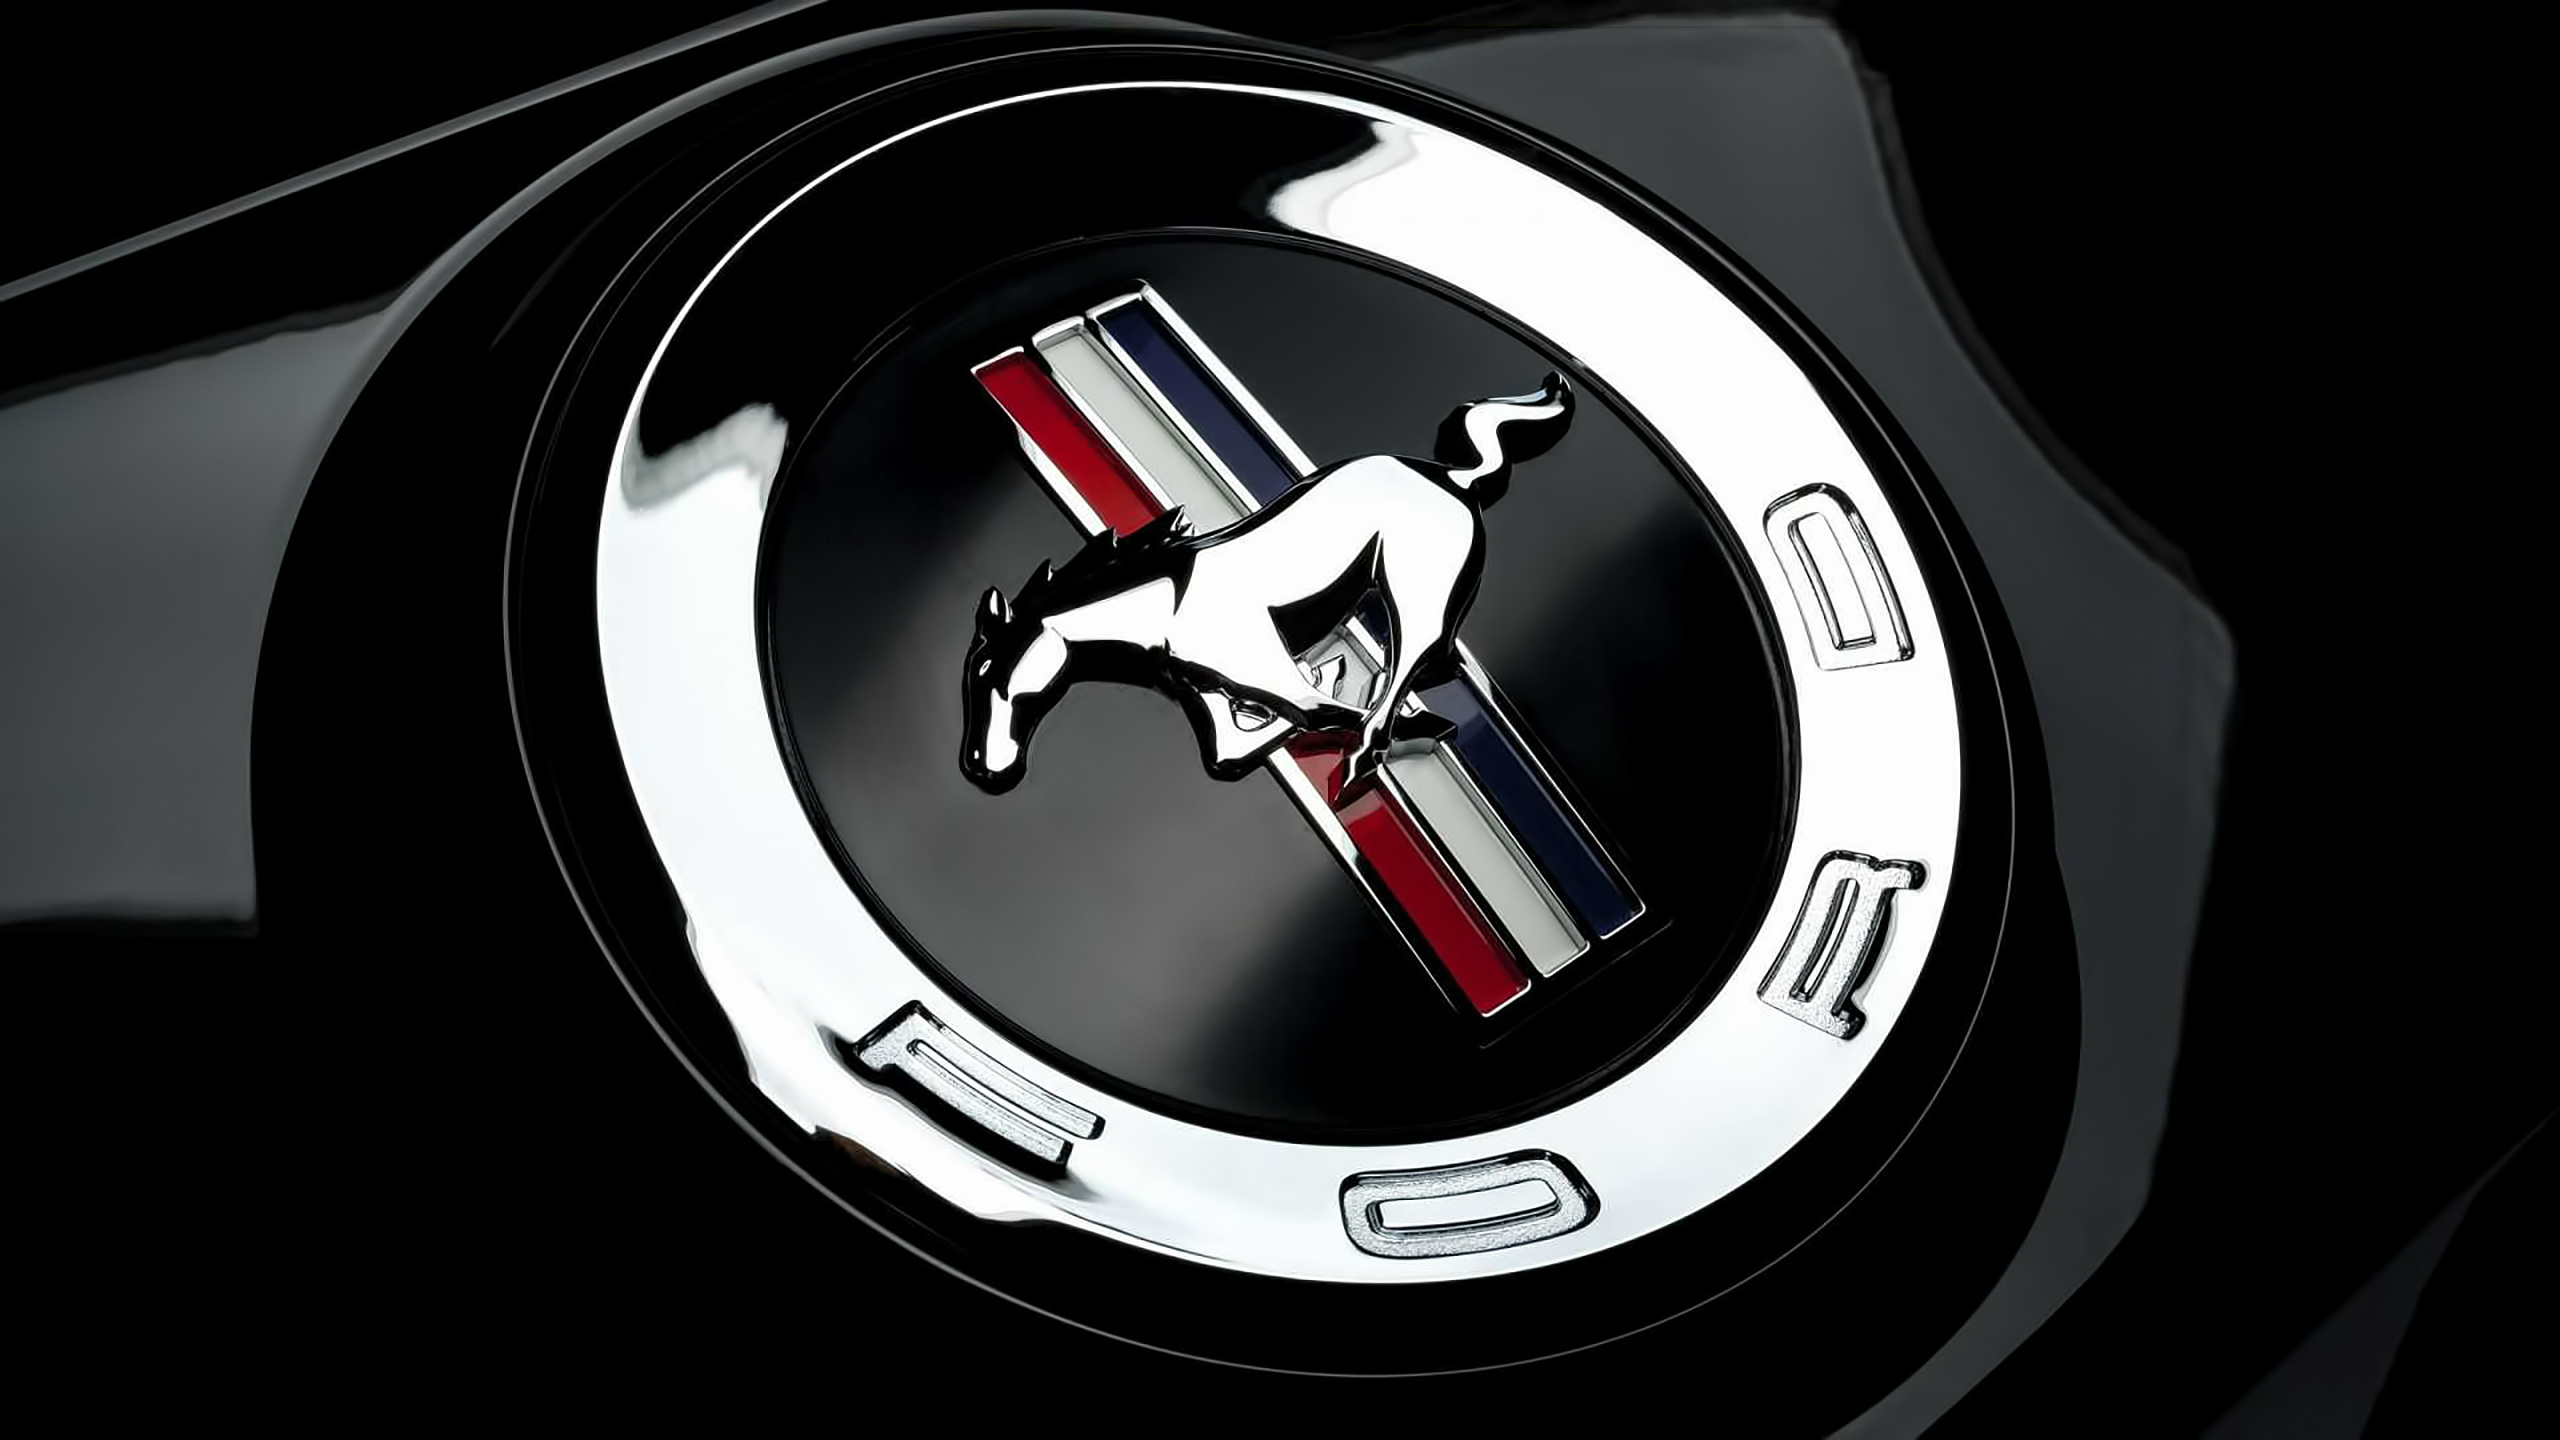 Mustang Logo Wallpaper HDQ Mustang Logo Images Collection 2560x1440